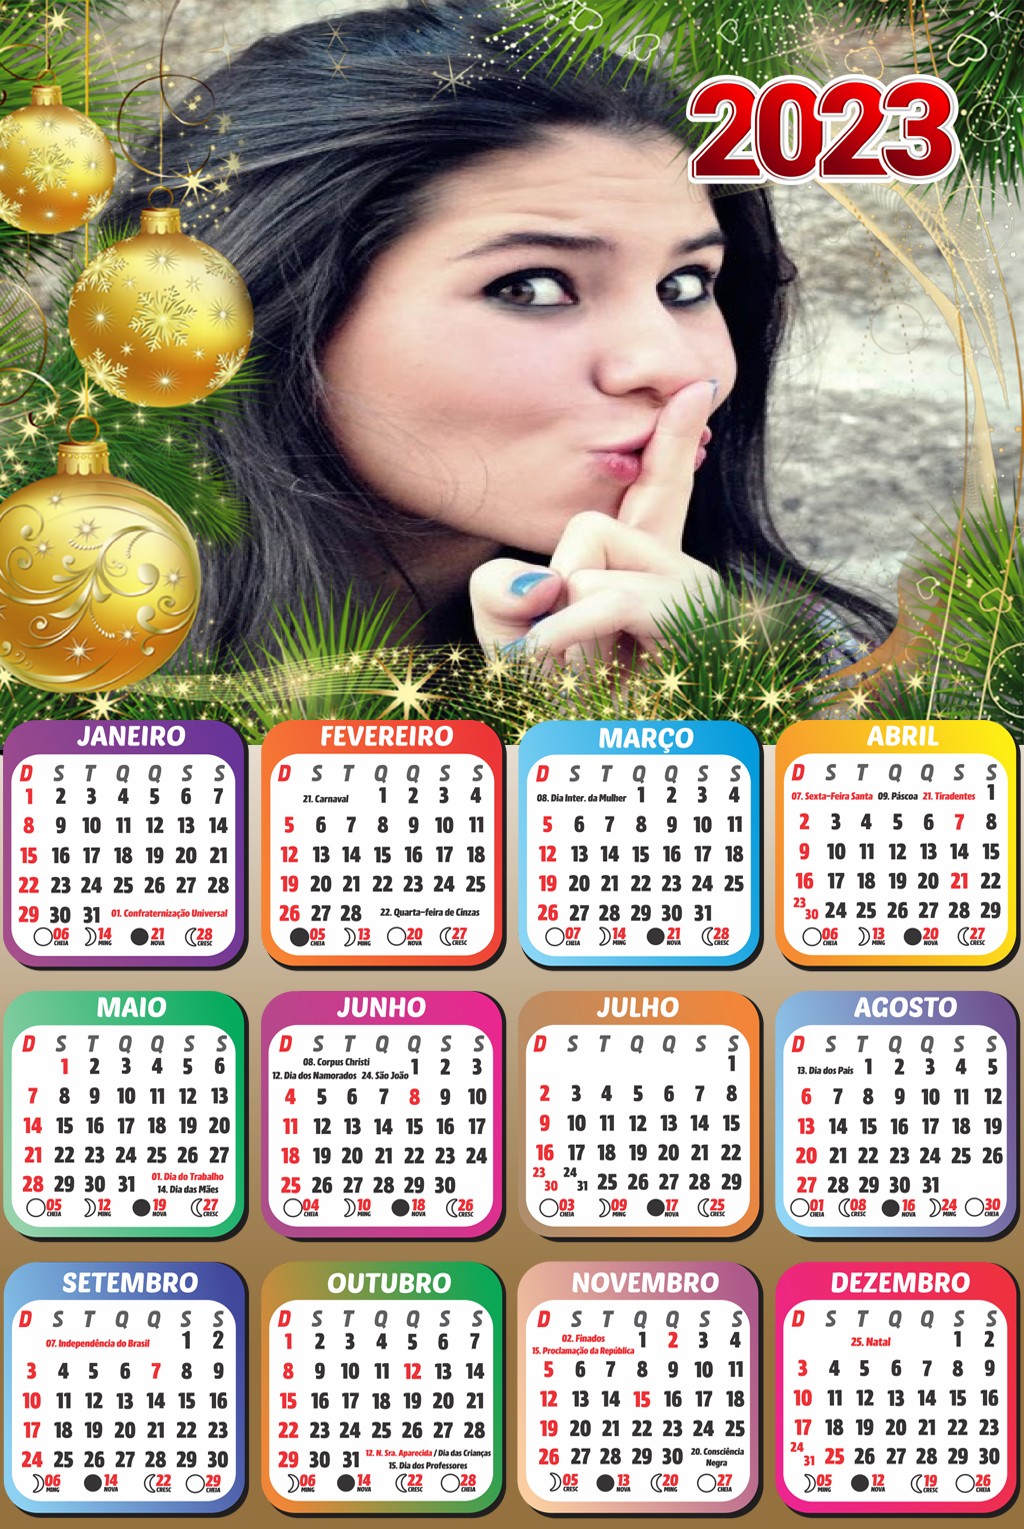 montar-foto-online-calendario-2023-natal